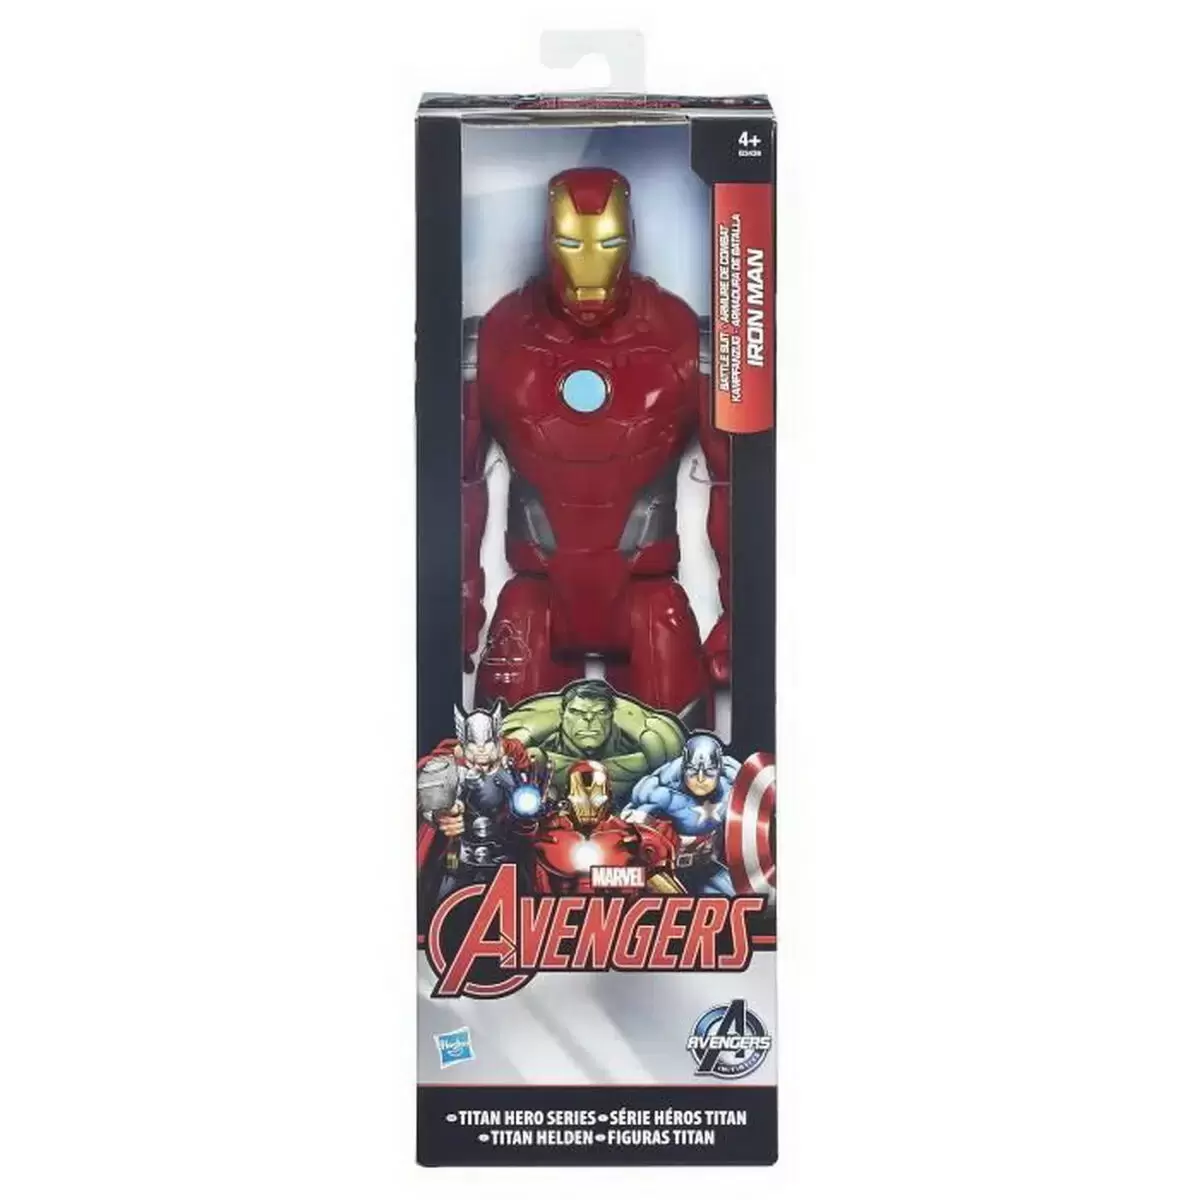 Iron Man Battle Suit - Avengers - Titan Hero Series action figure